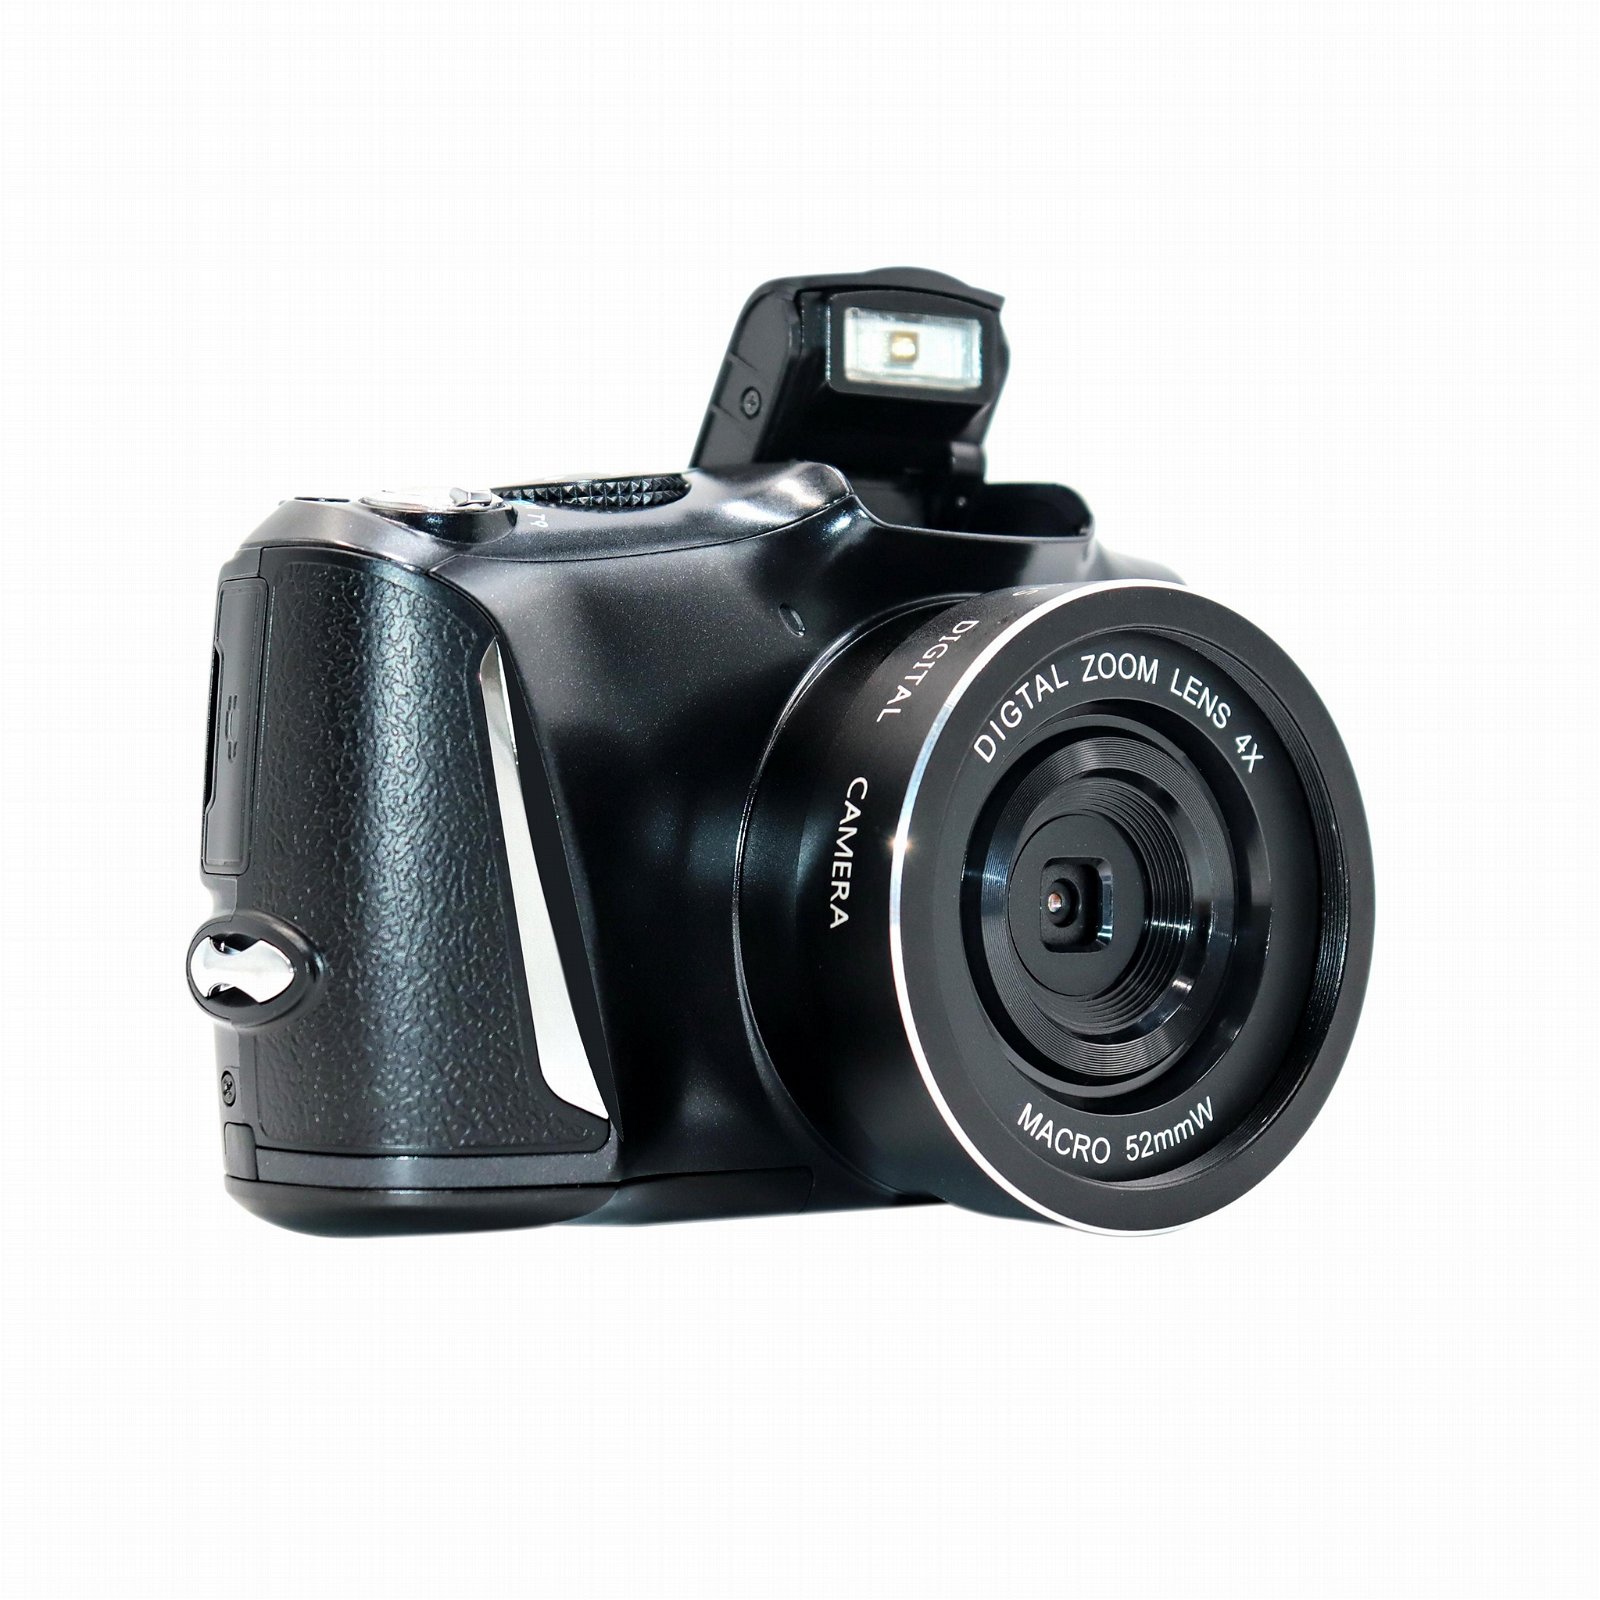 Max 48MP digital camera with 3.5'' Color display 4